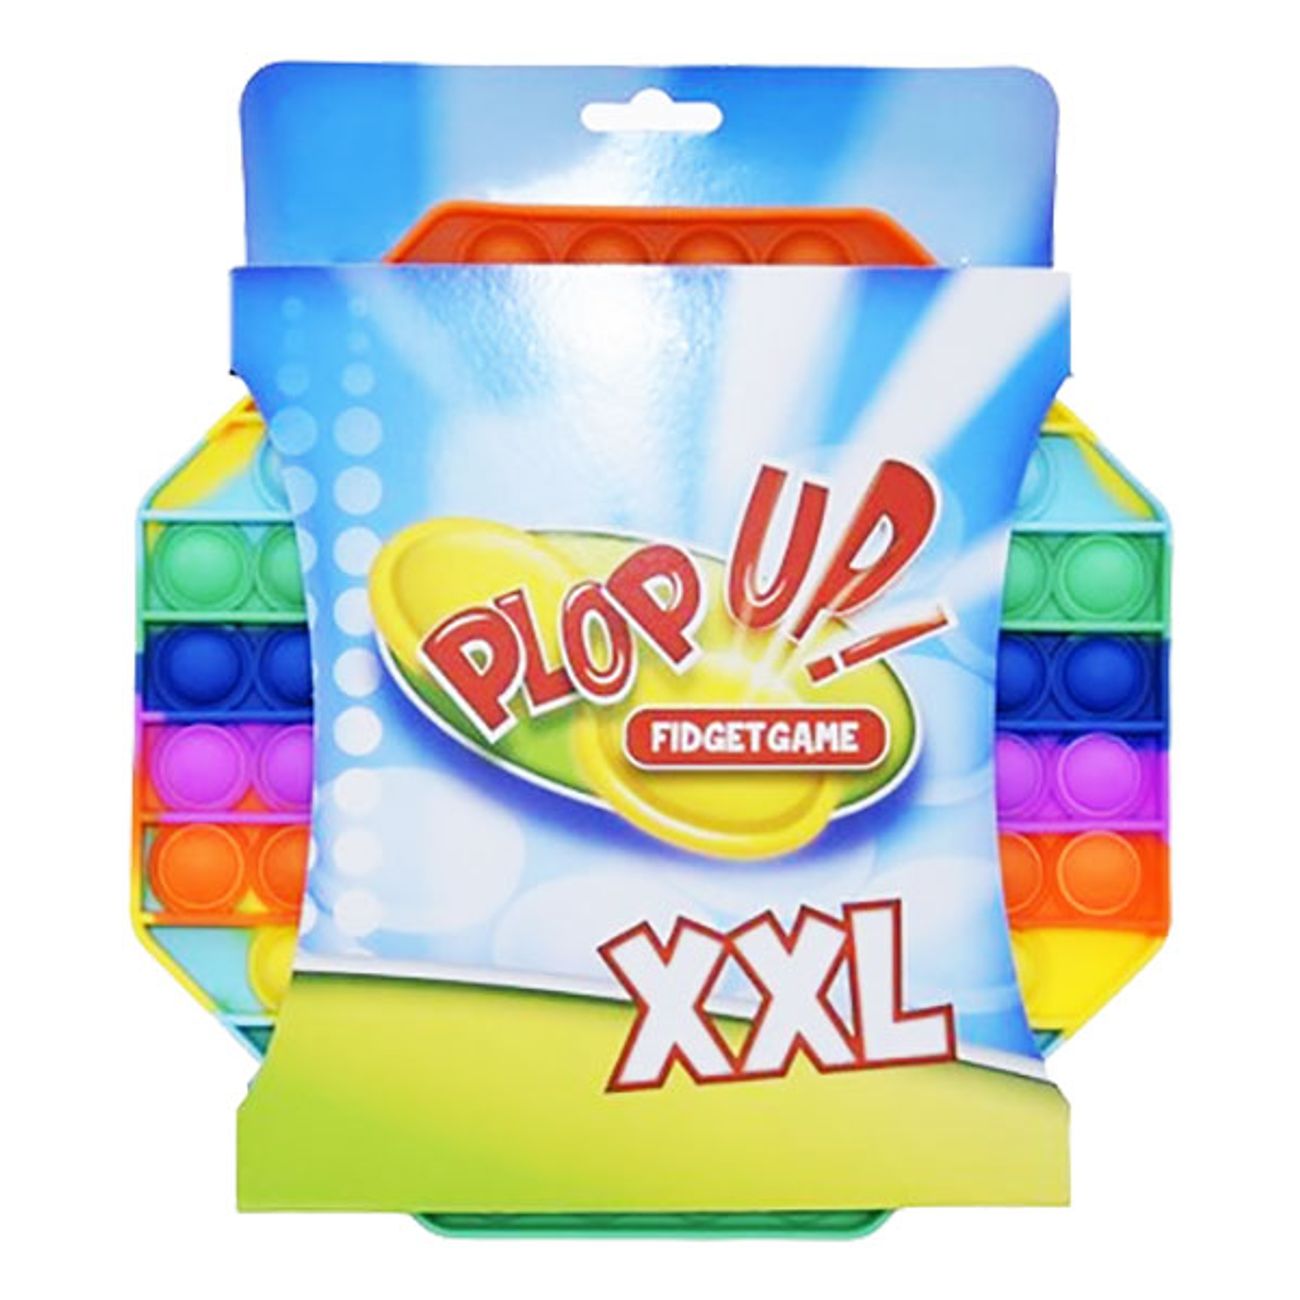 plop-up-fidget-toy-xxl-hegaxon-80383-1